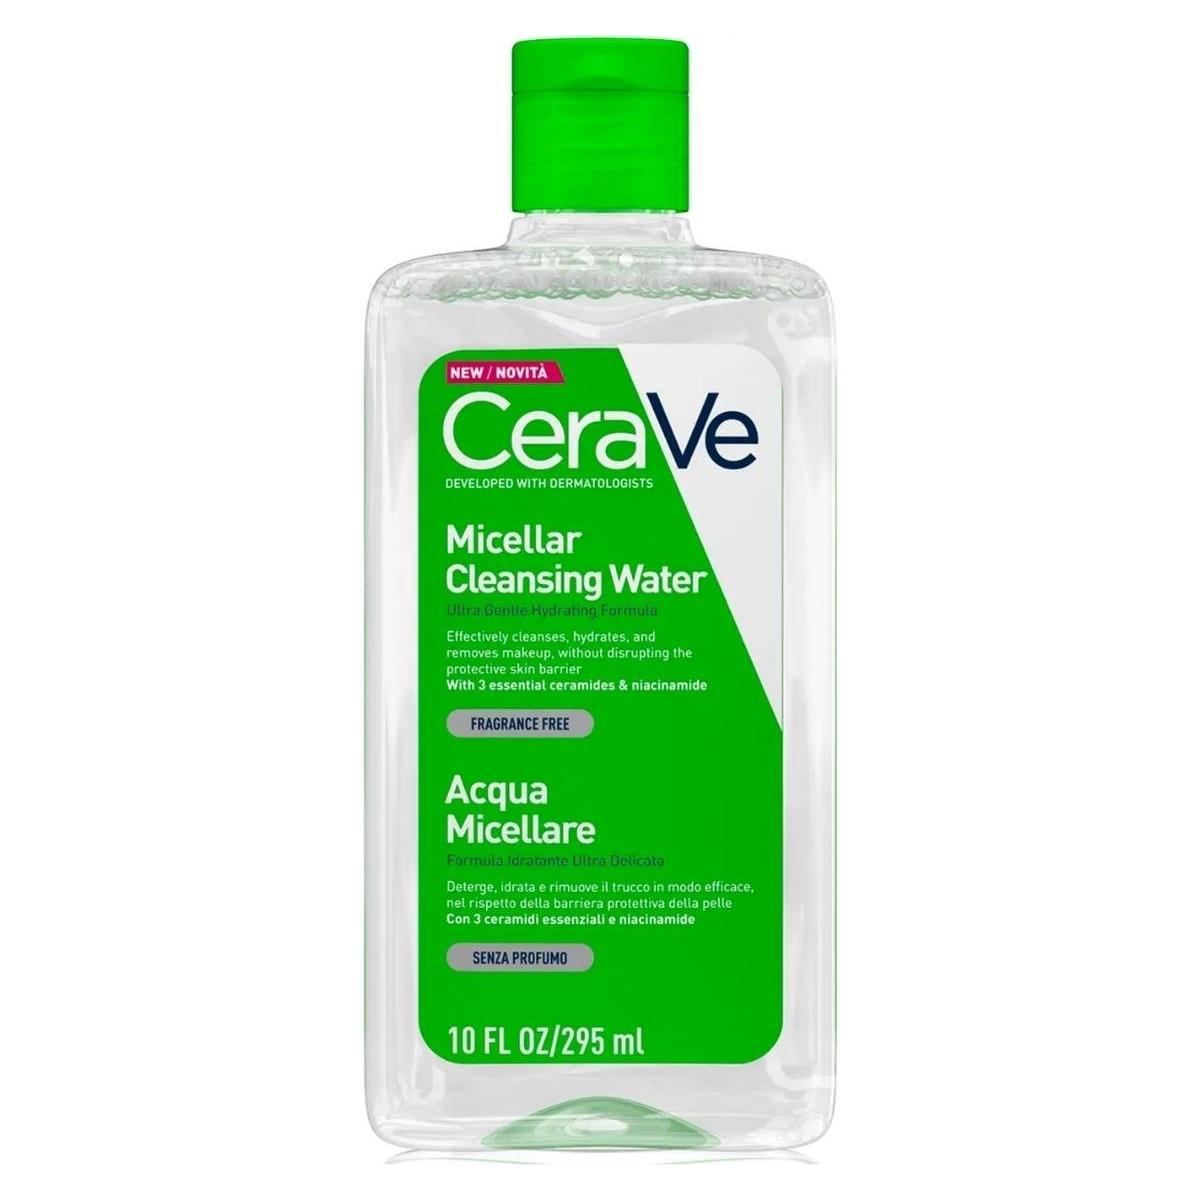 CeraVe | Micellar Cleansing Water - DG International Ventures Limited